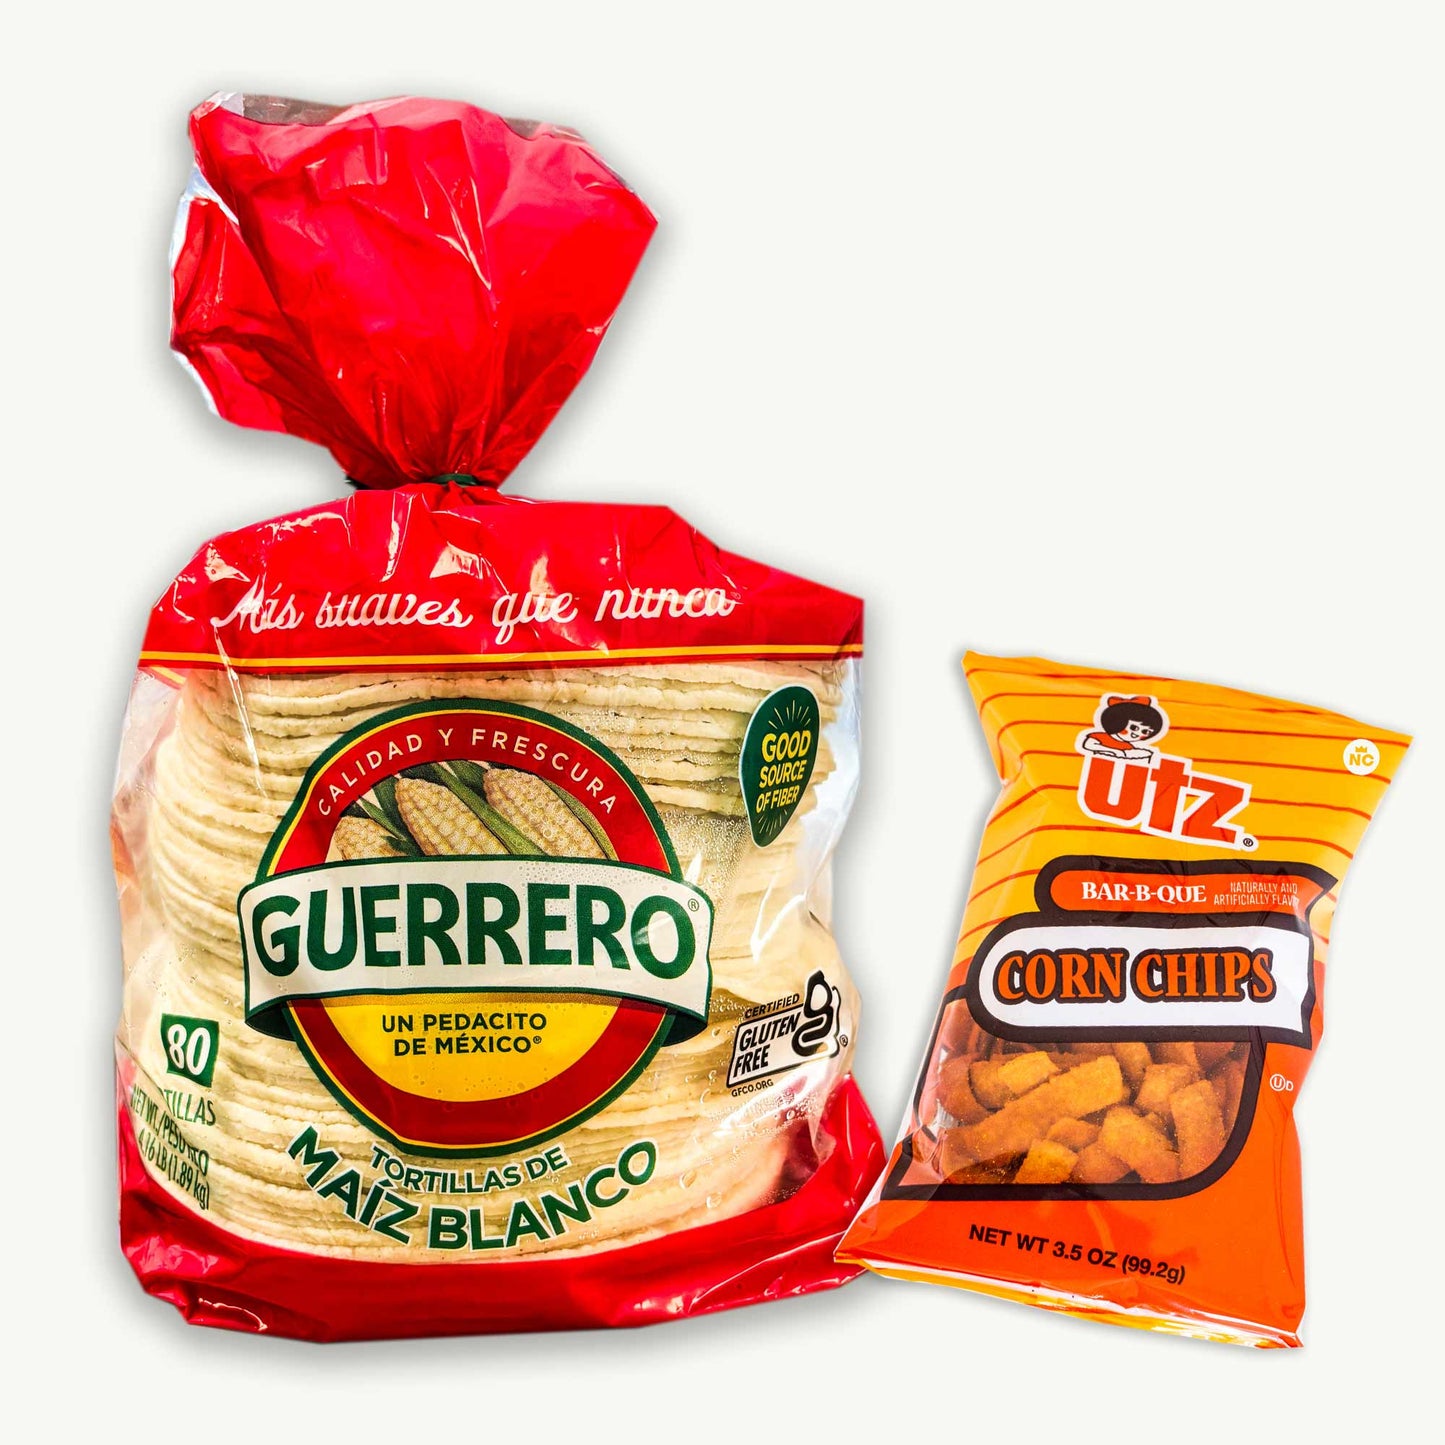 Guerrero Gluten Free White Corn Tortillas (80ct) - BBQ Corn Chips (3.5oz)